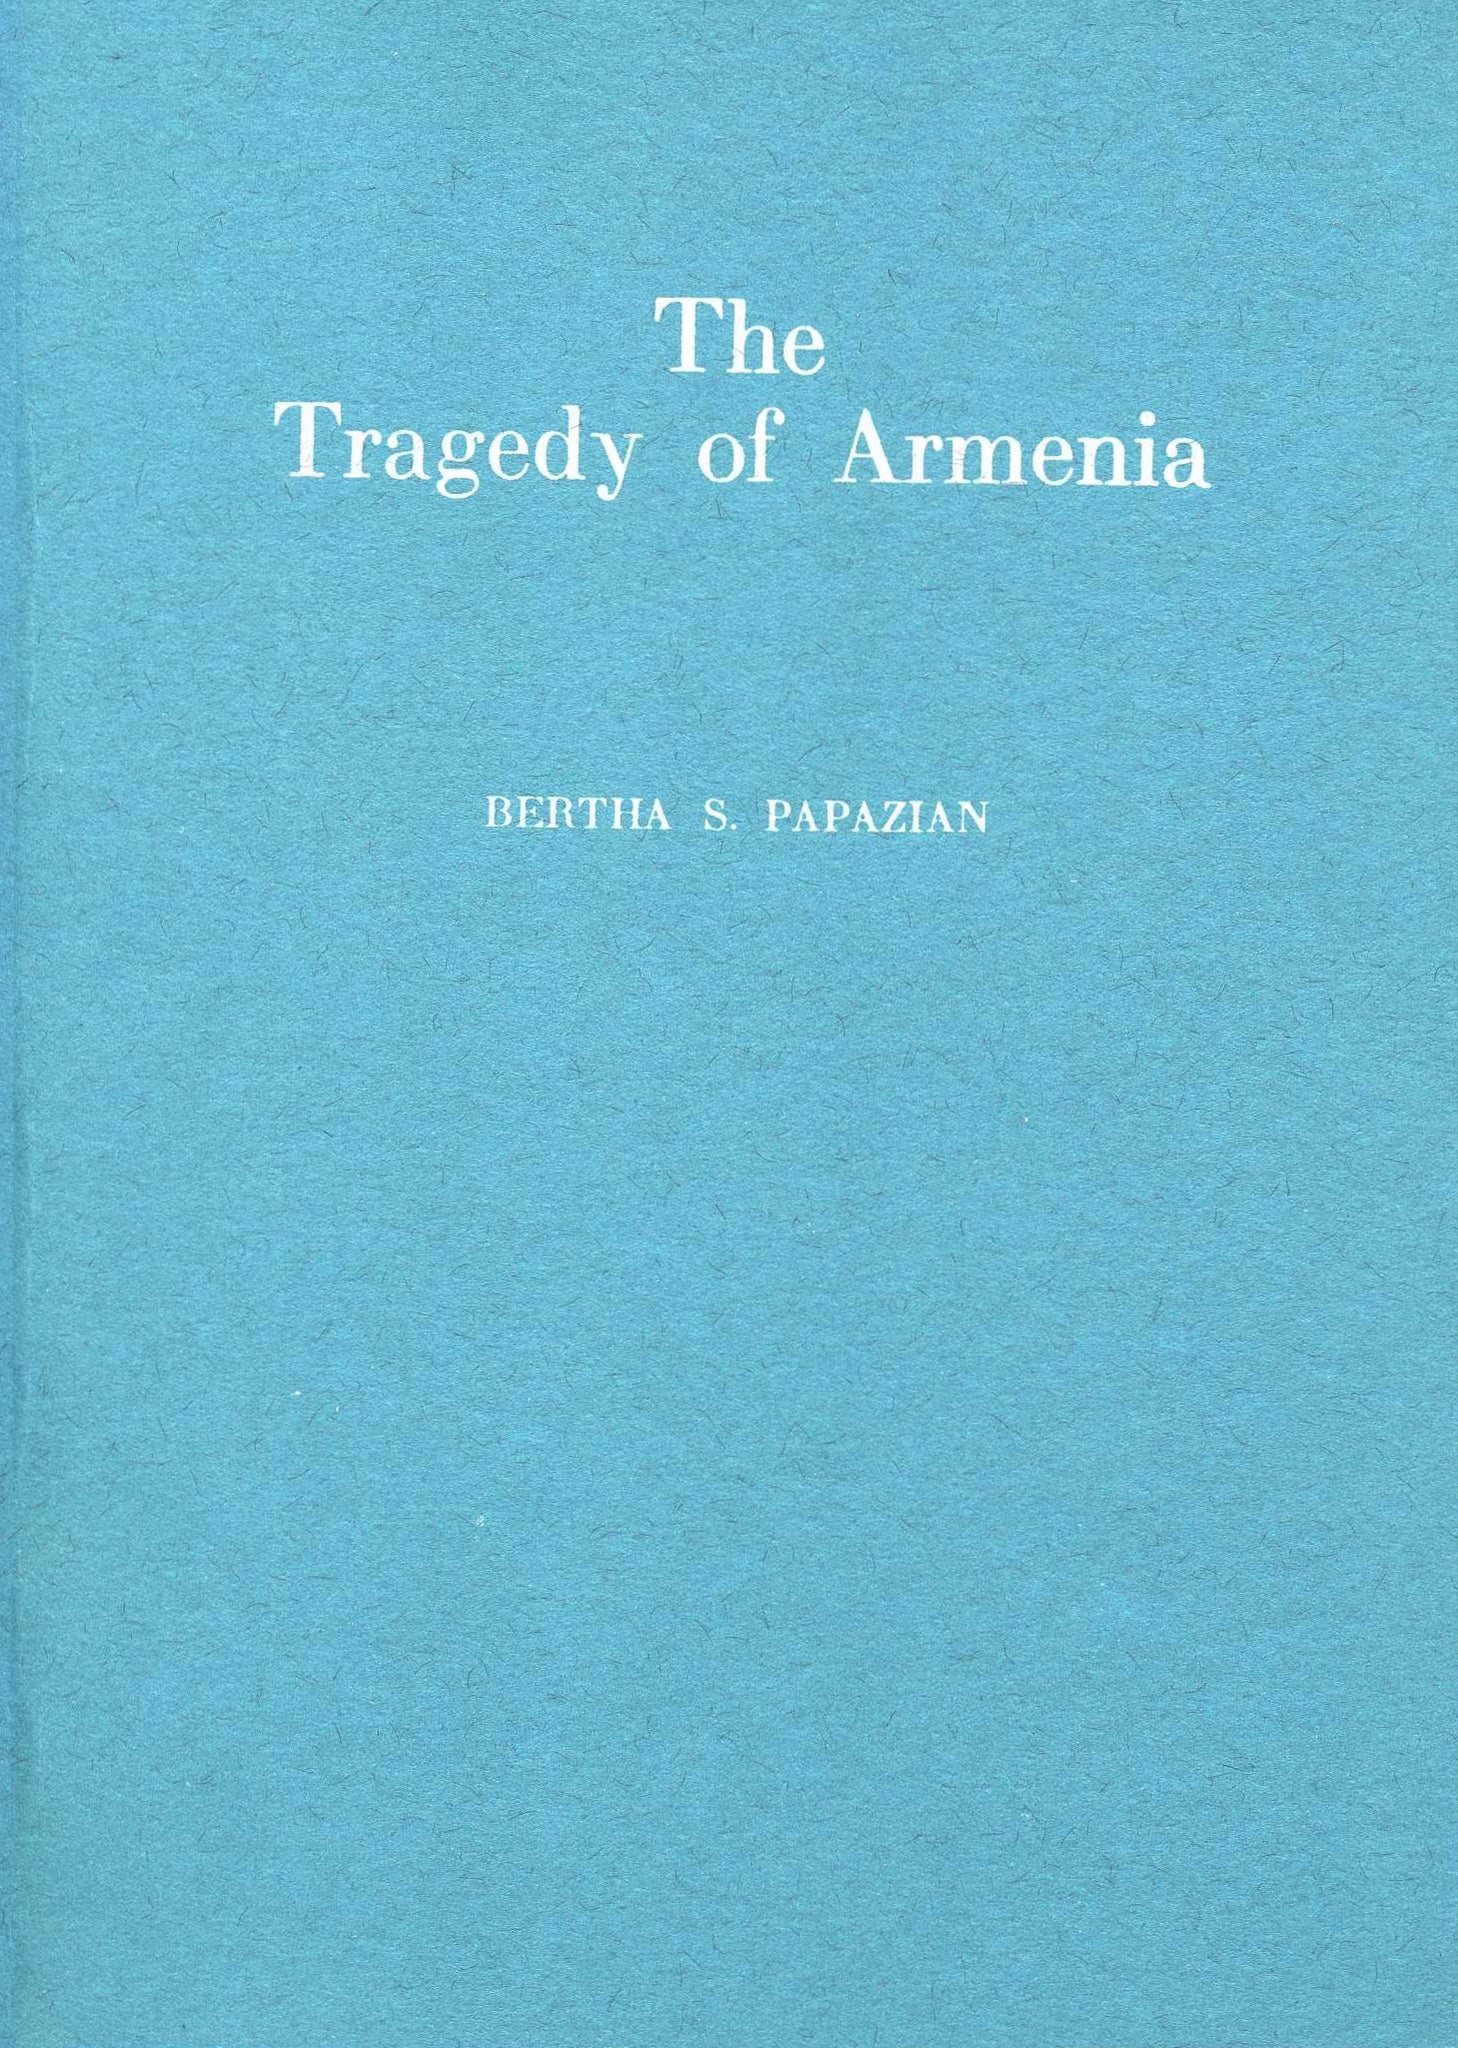 TRAGEDY OF ARMENIA: Brief Study and Interpretation